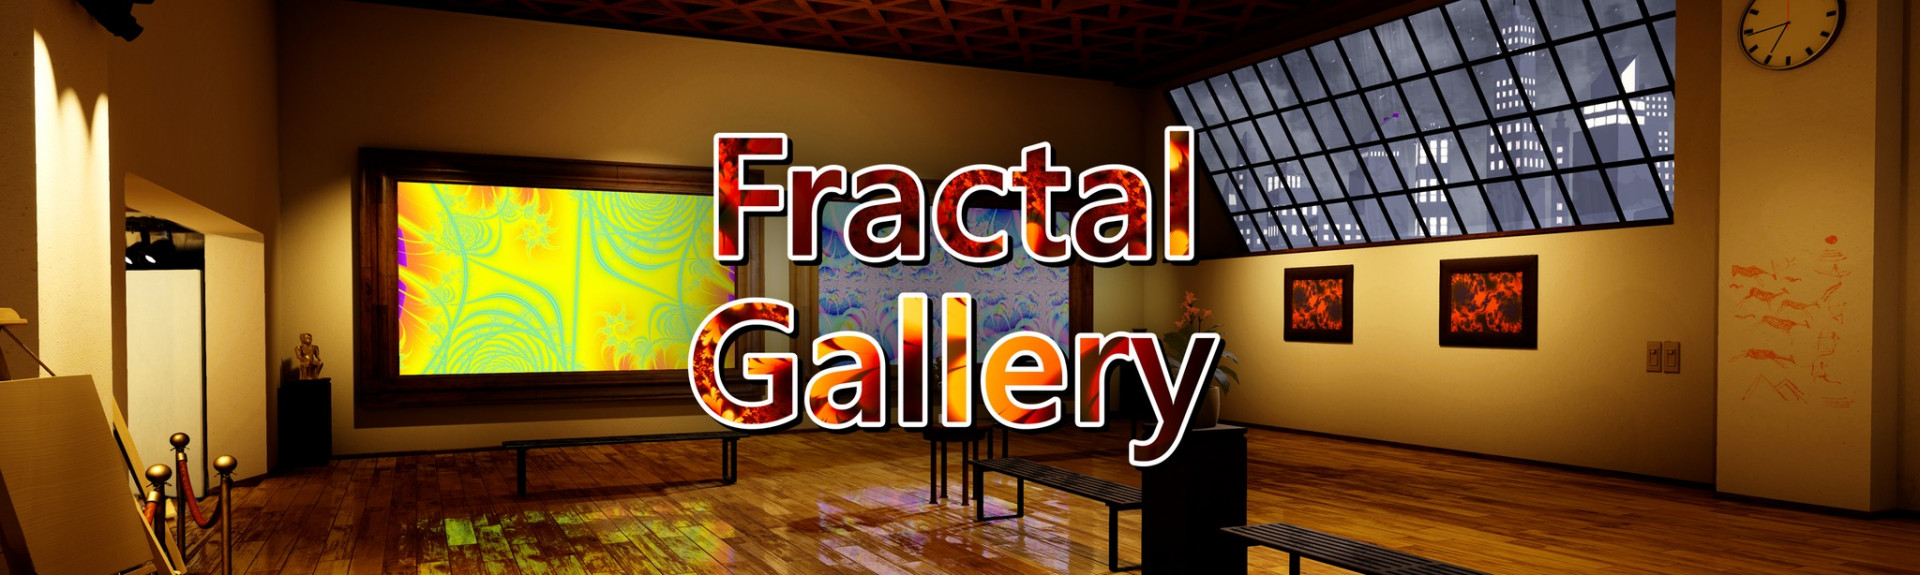 Fractal Gallery